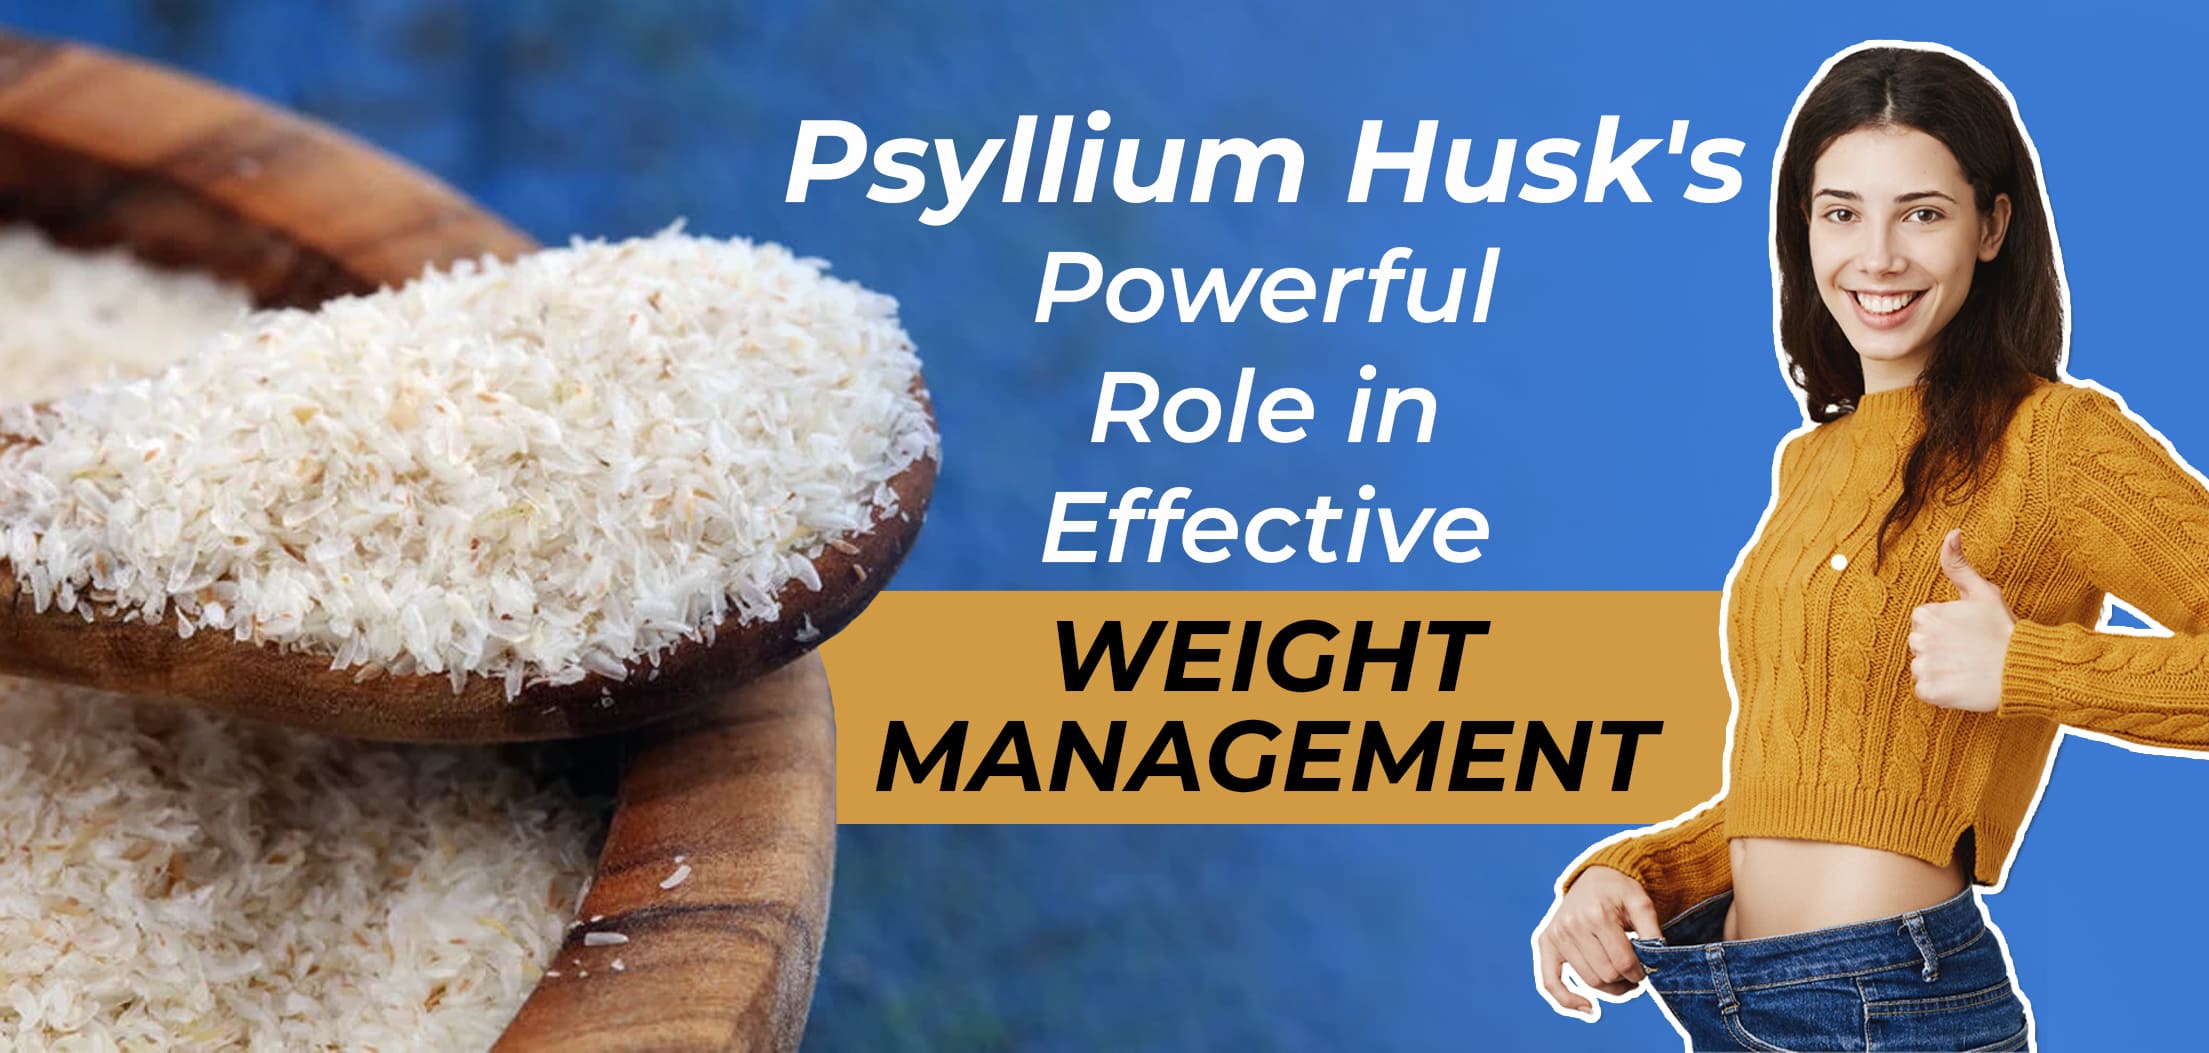  Psyllium Husk's Powerful Role in Effective Weight Management